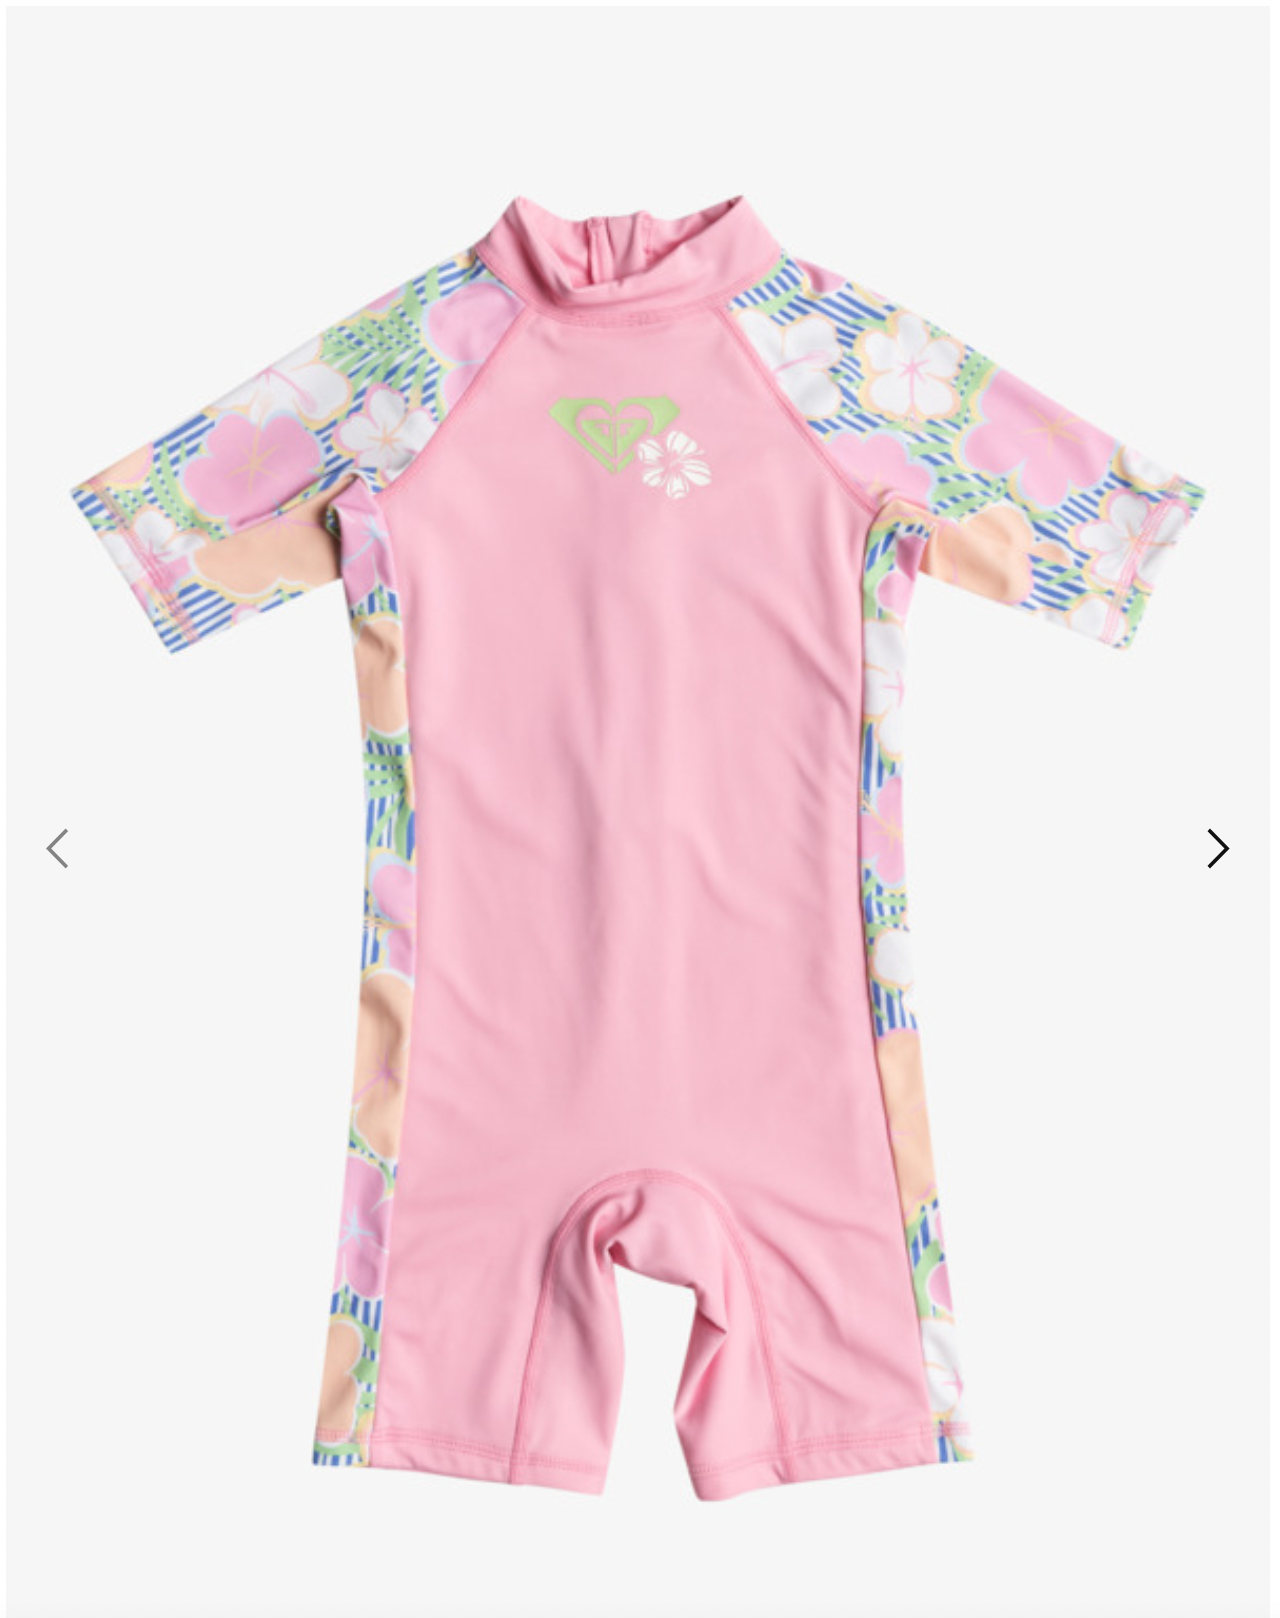 ROXY Tiny Flower - Short Sleeve One-Piece Rash Vest for Girls 2-7